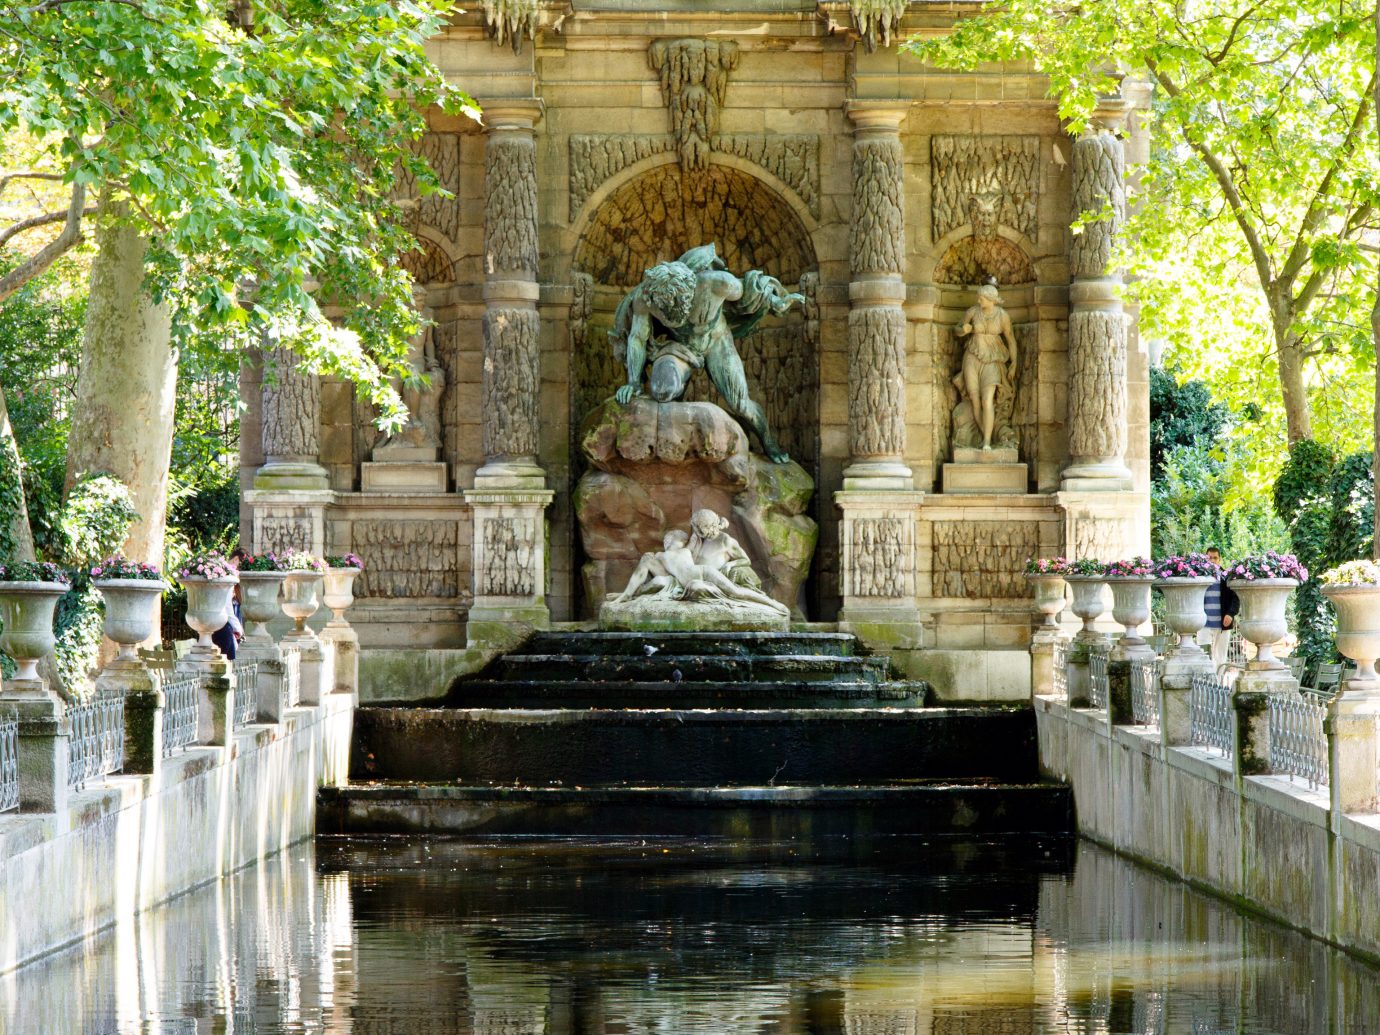 France Paris Trip Ideas landmark tourism temple water feature palace place of worship estate fountain ancient history shrine monument Garden altar colonnade